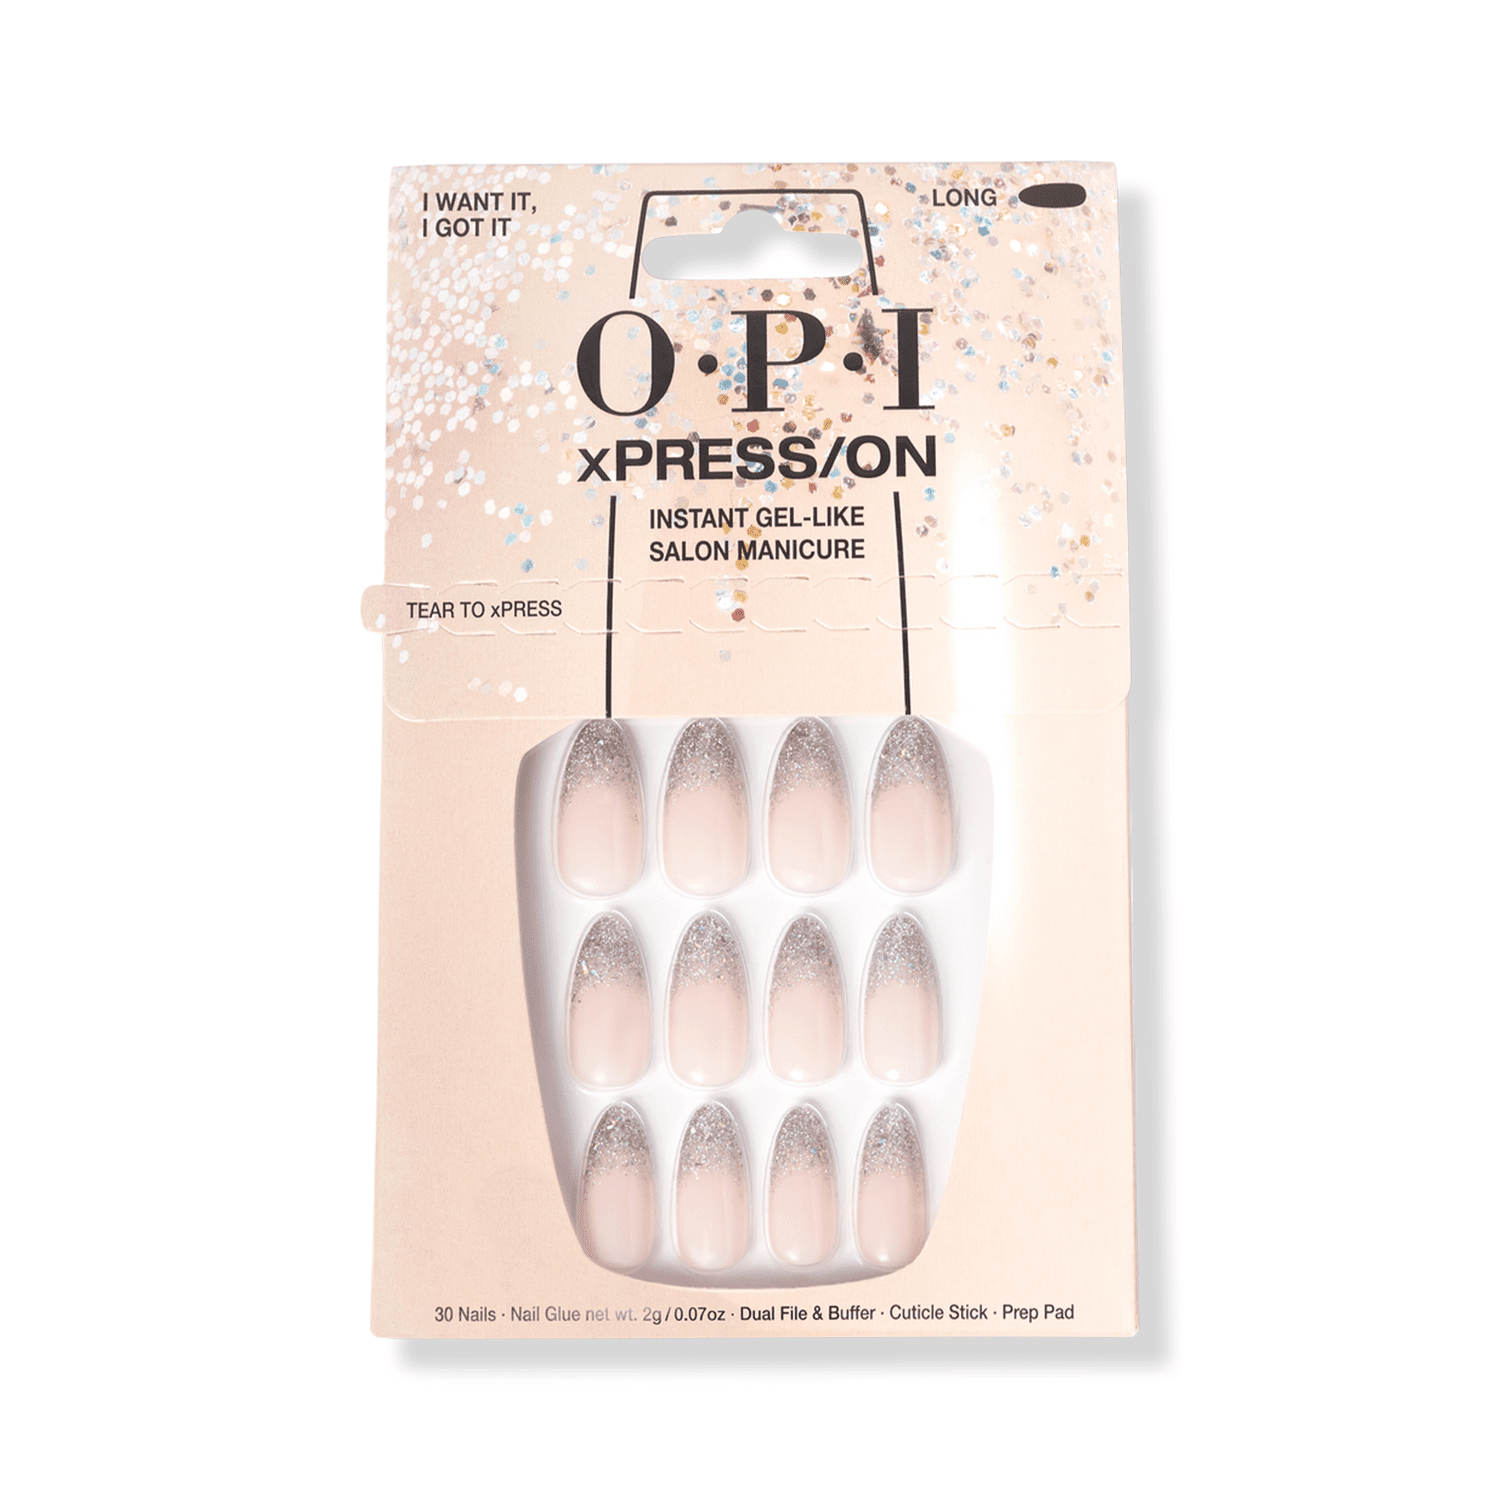 OPI Xpress/On Nail Art Press em unhas